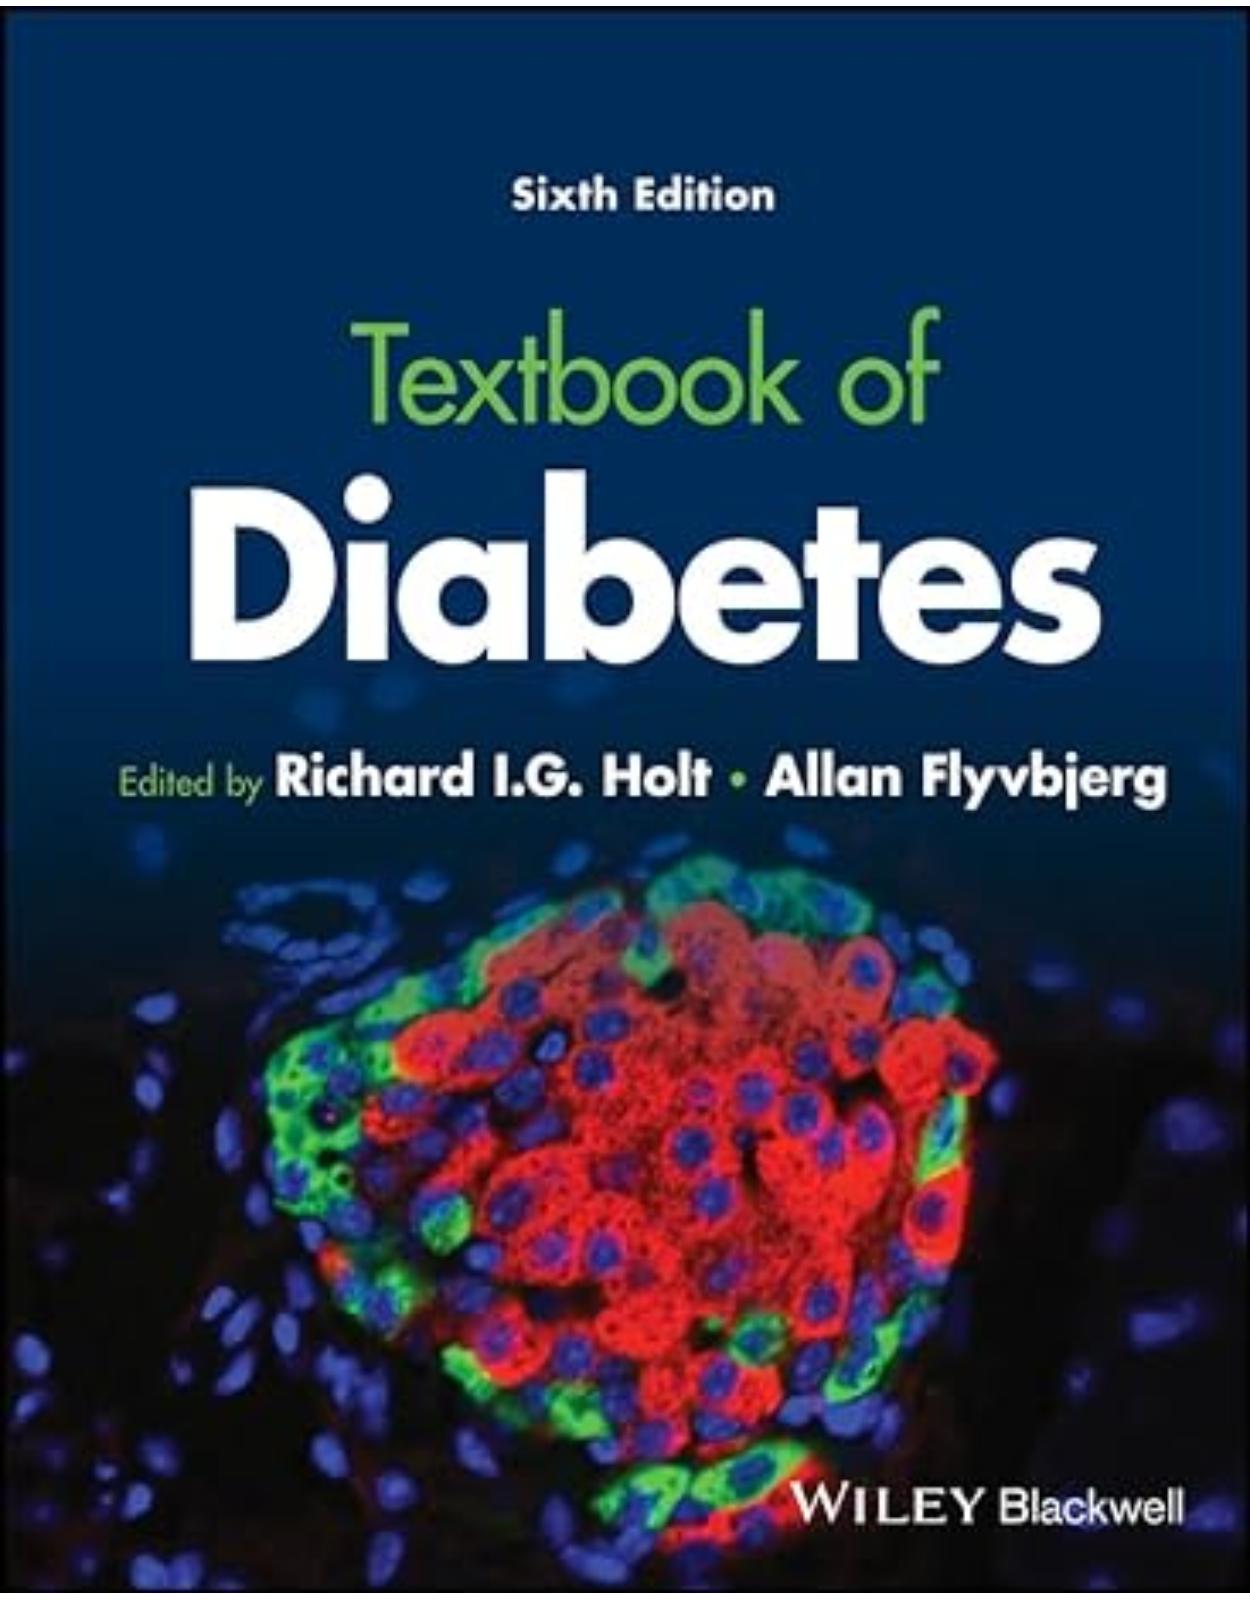 Textbook of Diabetes 6e